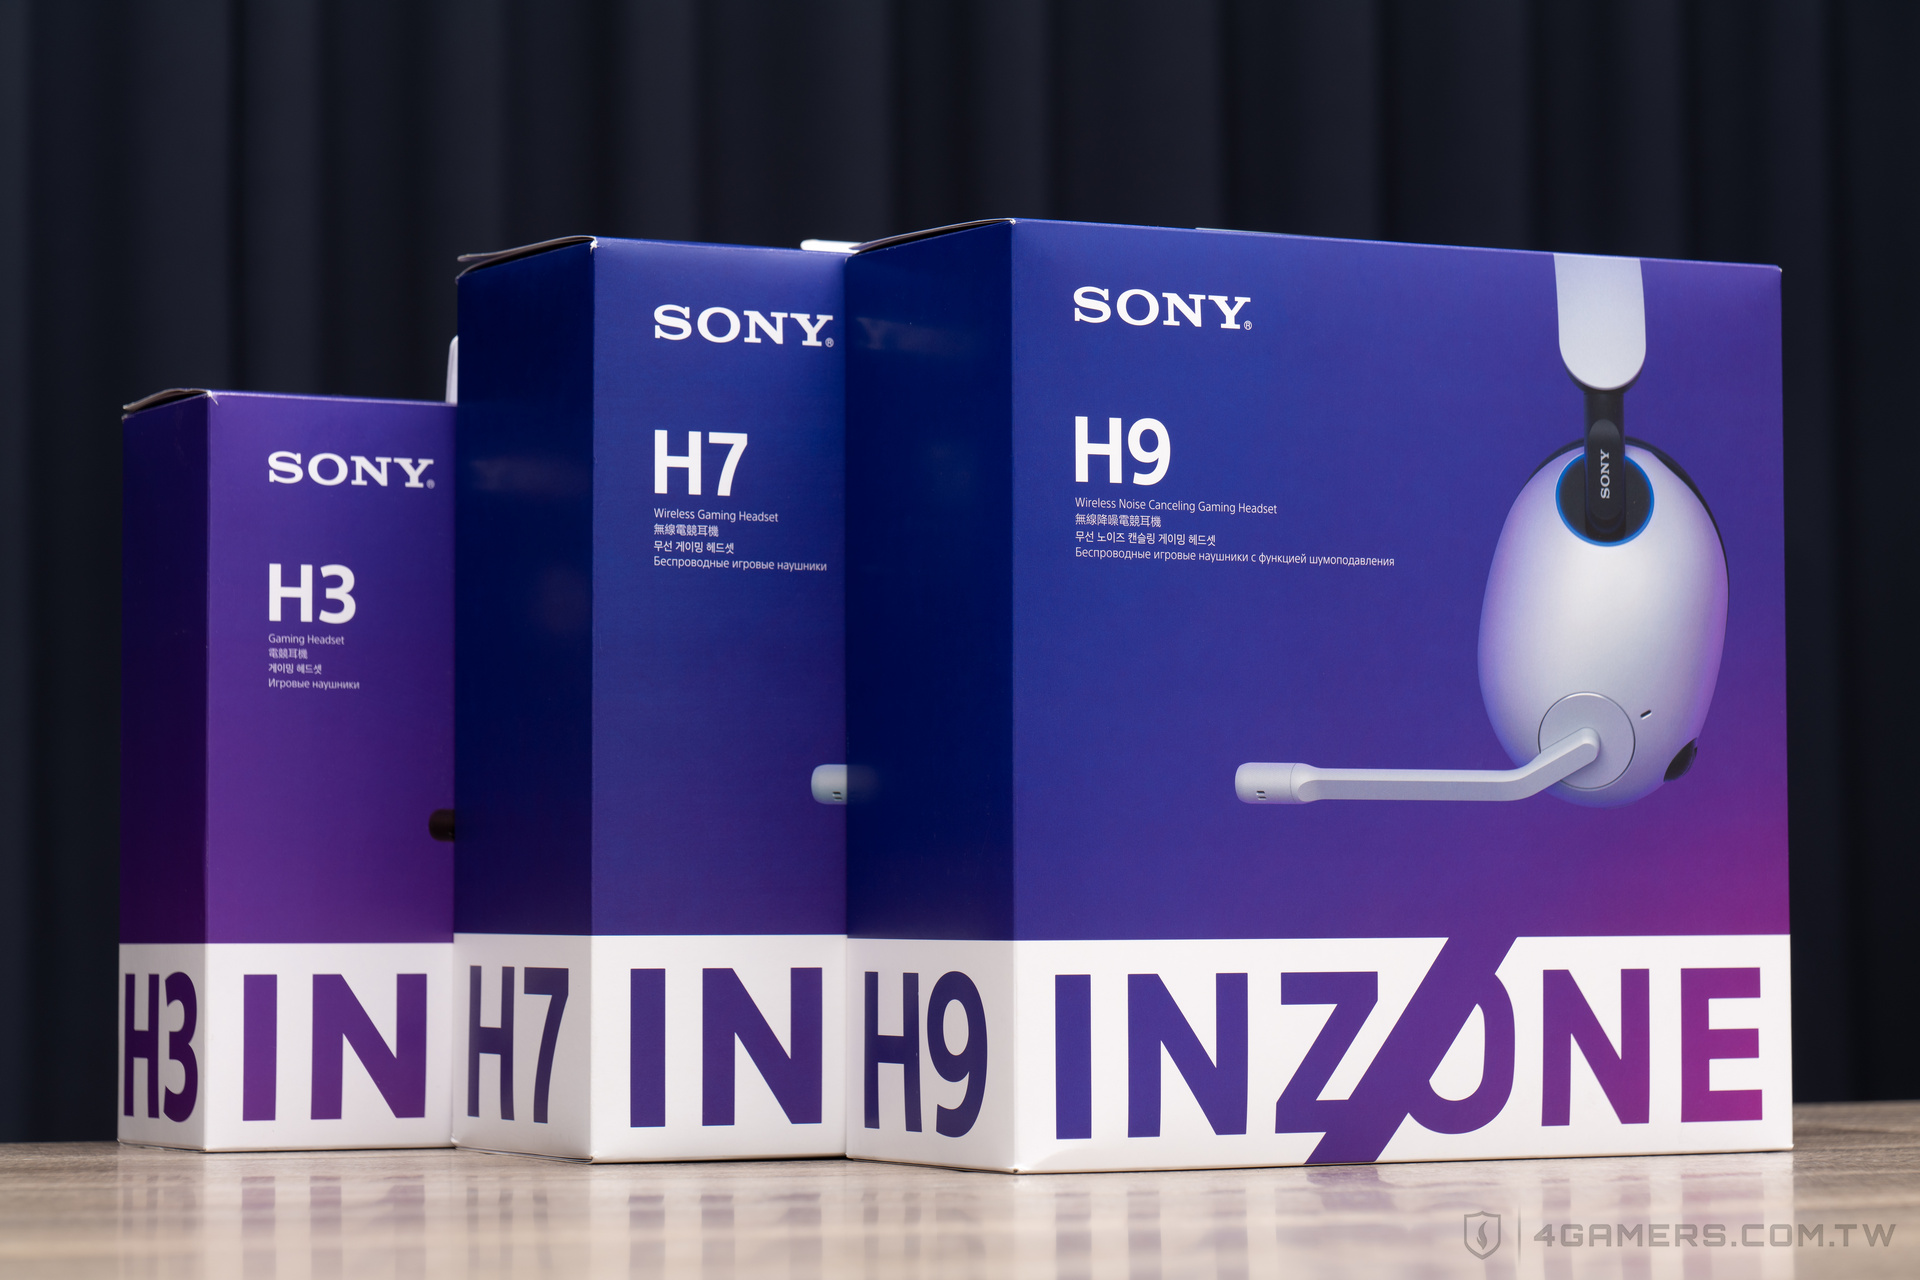 Sony INZONE H9 / H7 / H3